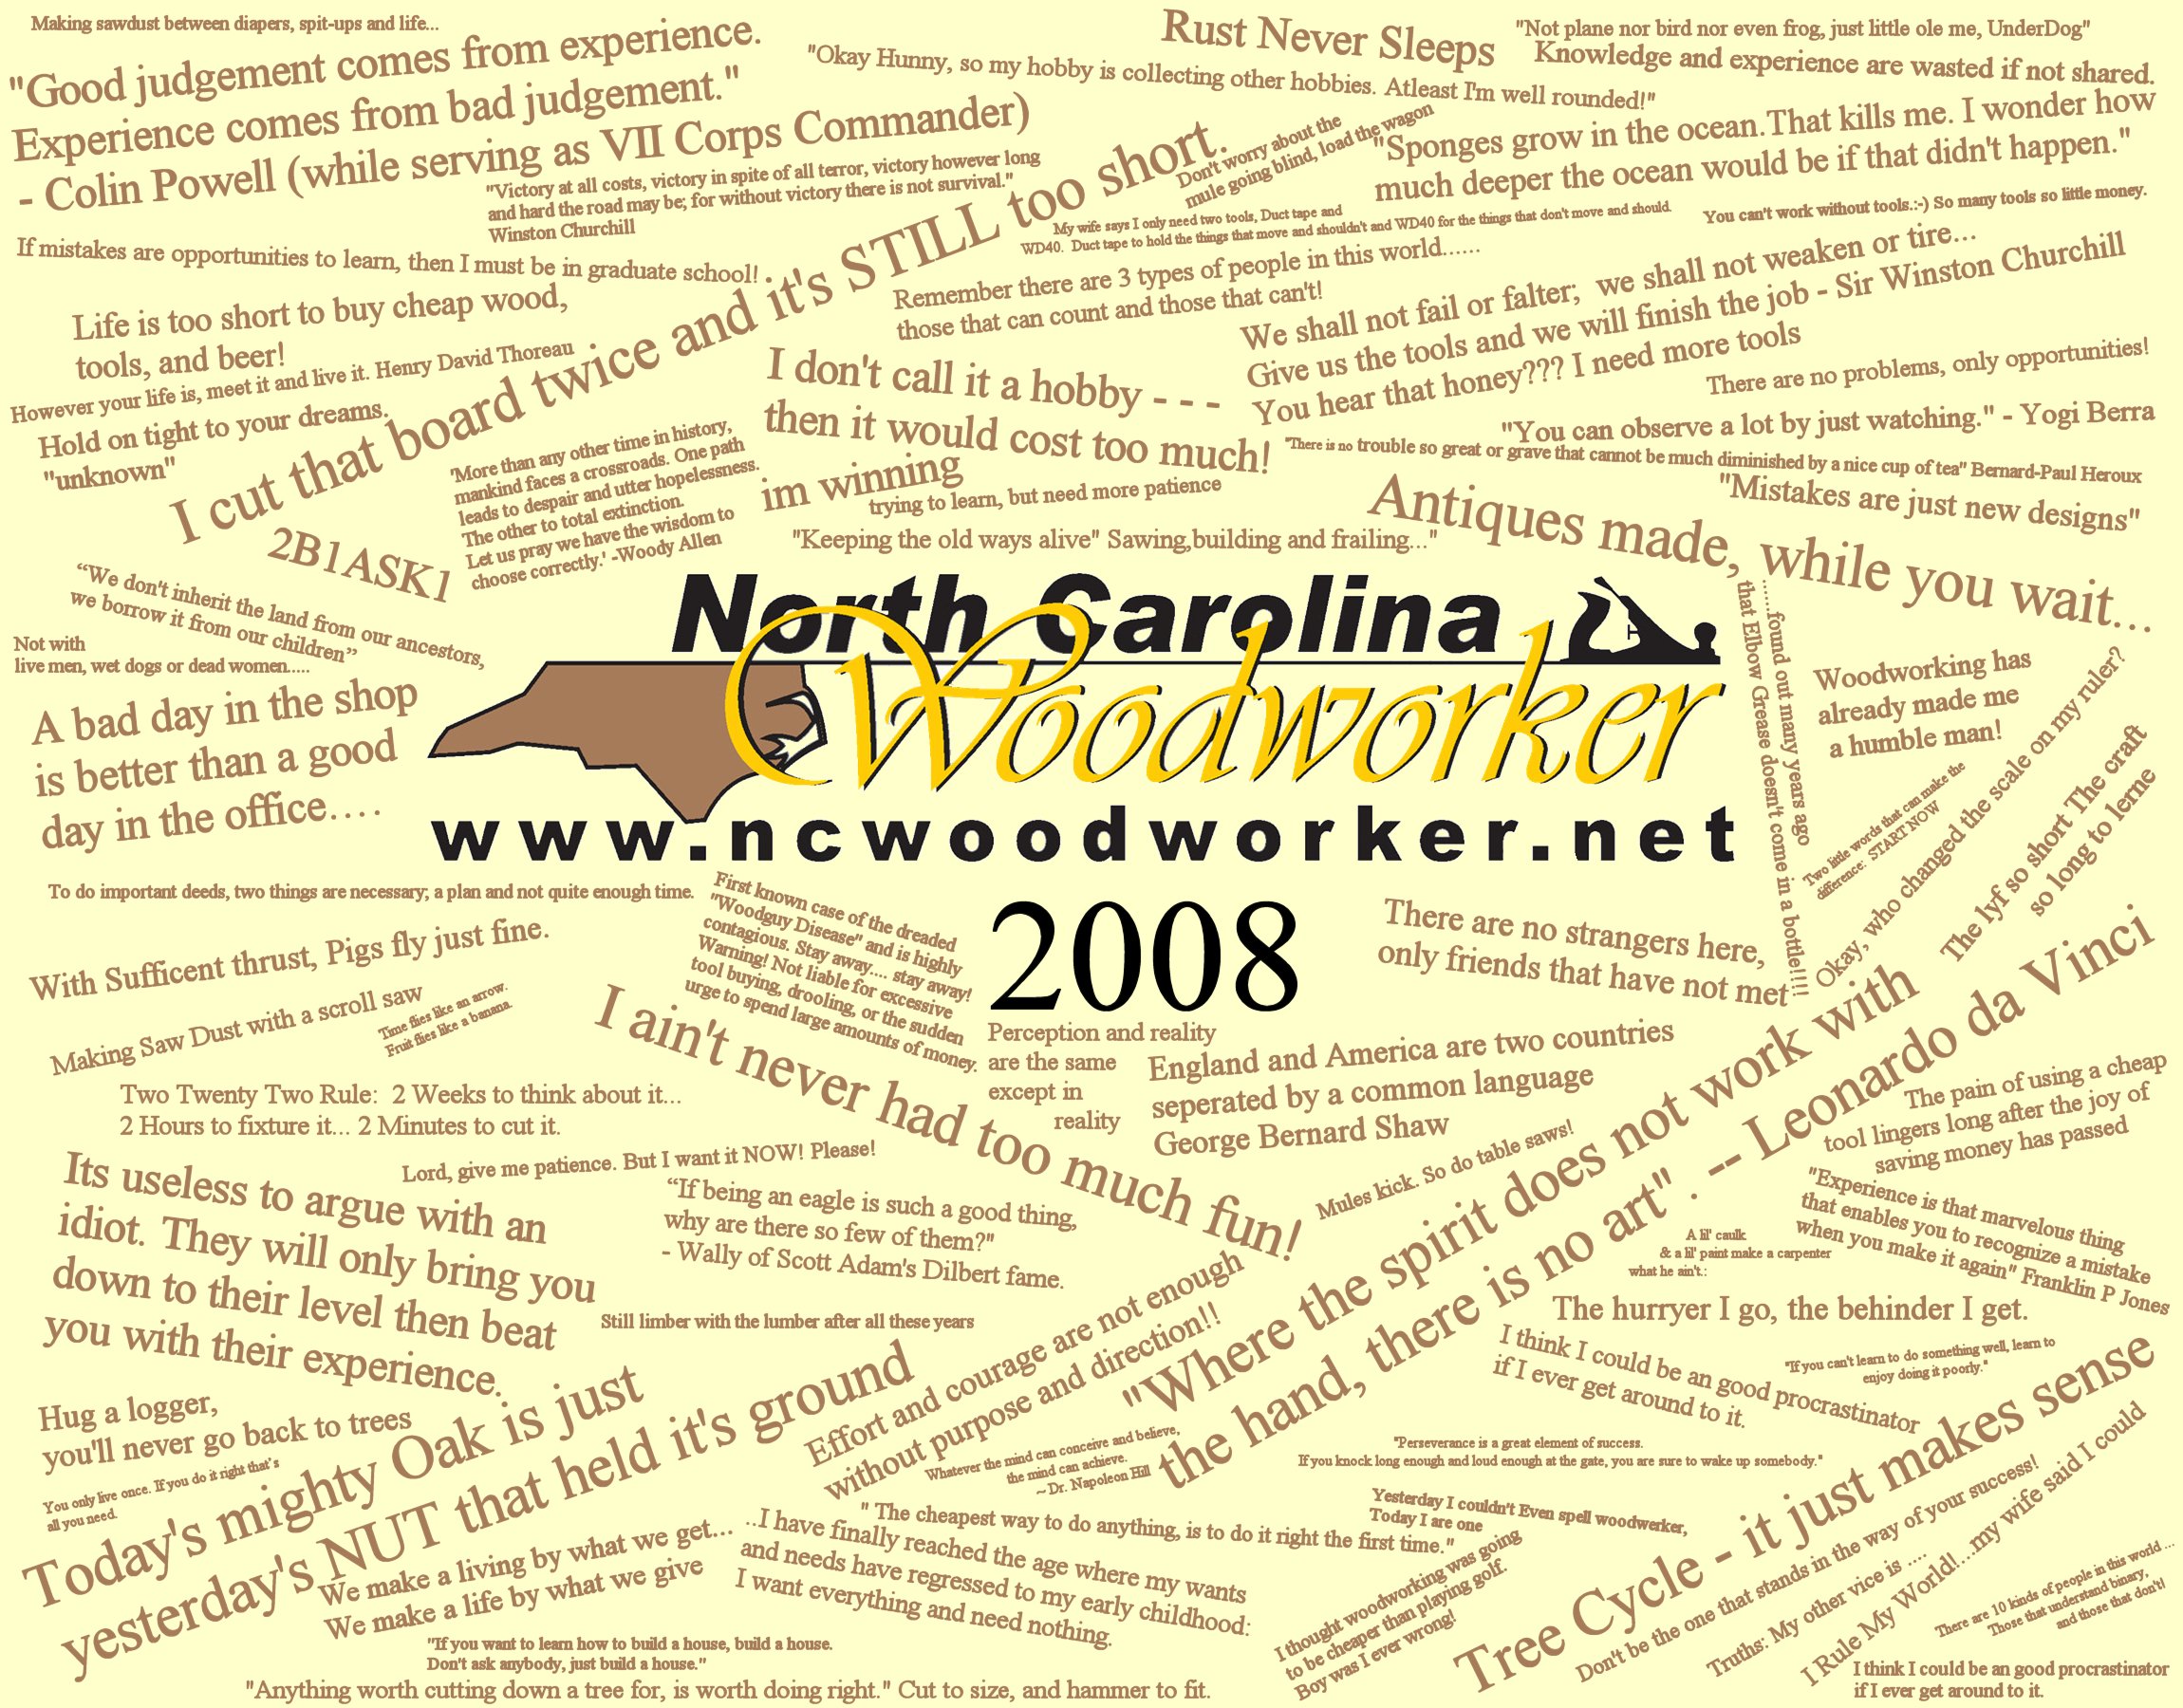 2008 NCWW Calendar Cover